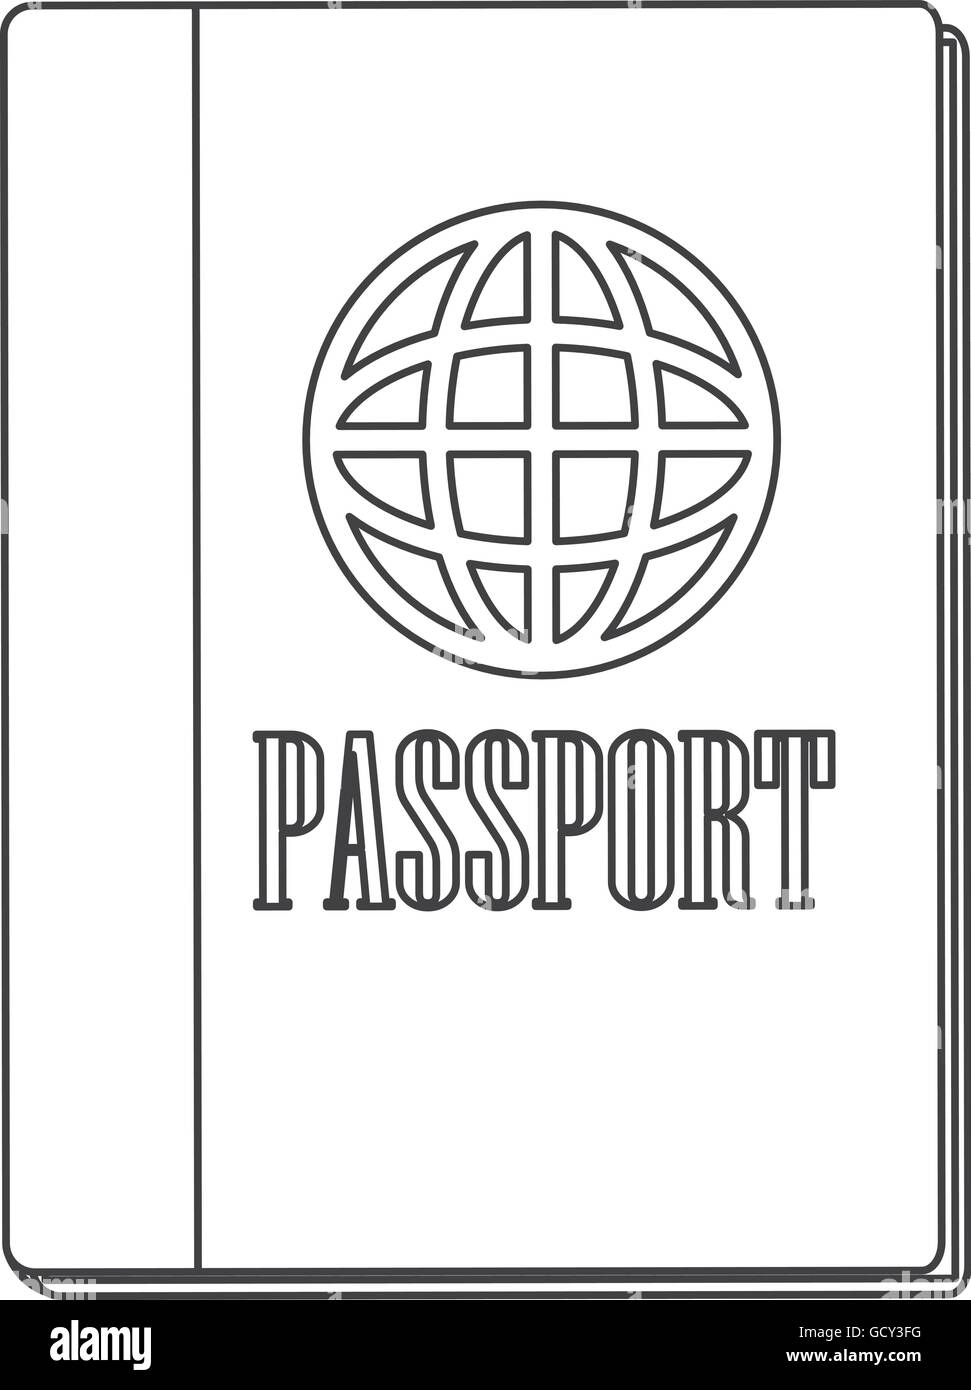 passport with earth diagram icon Stock Vector